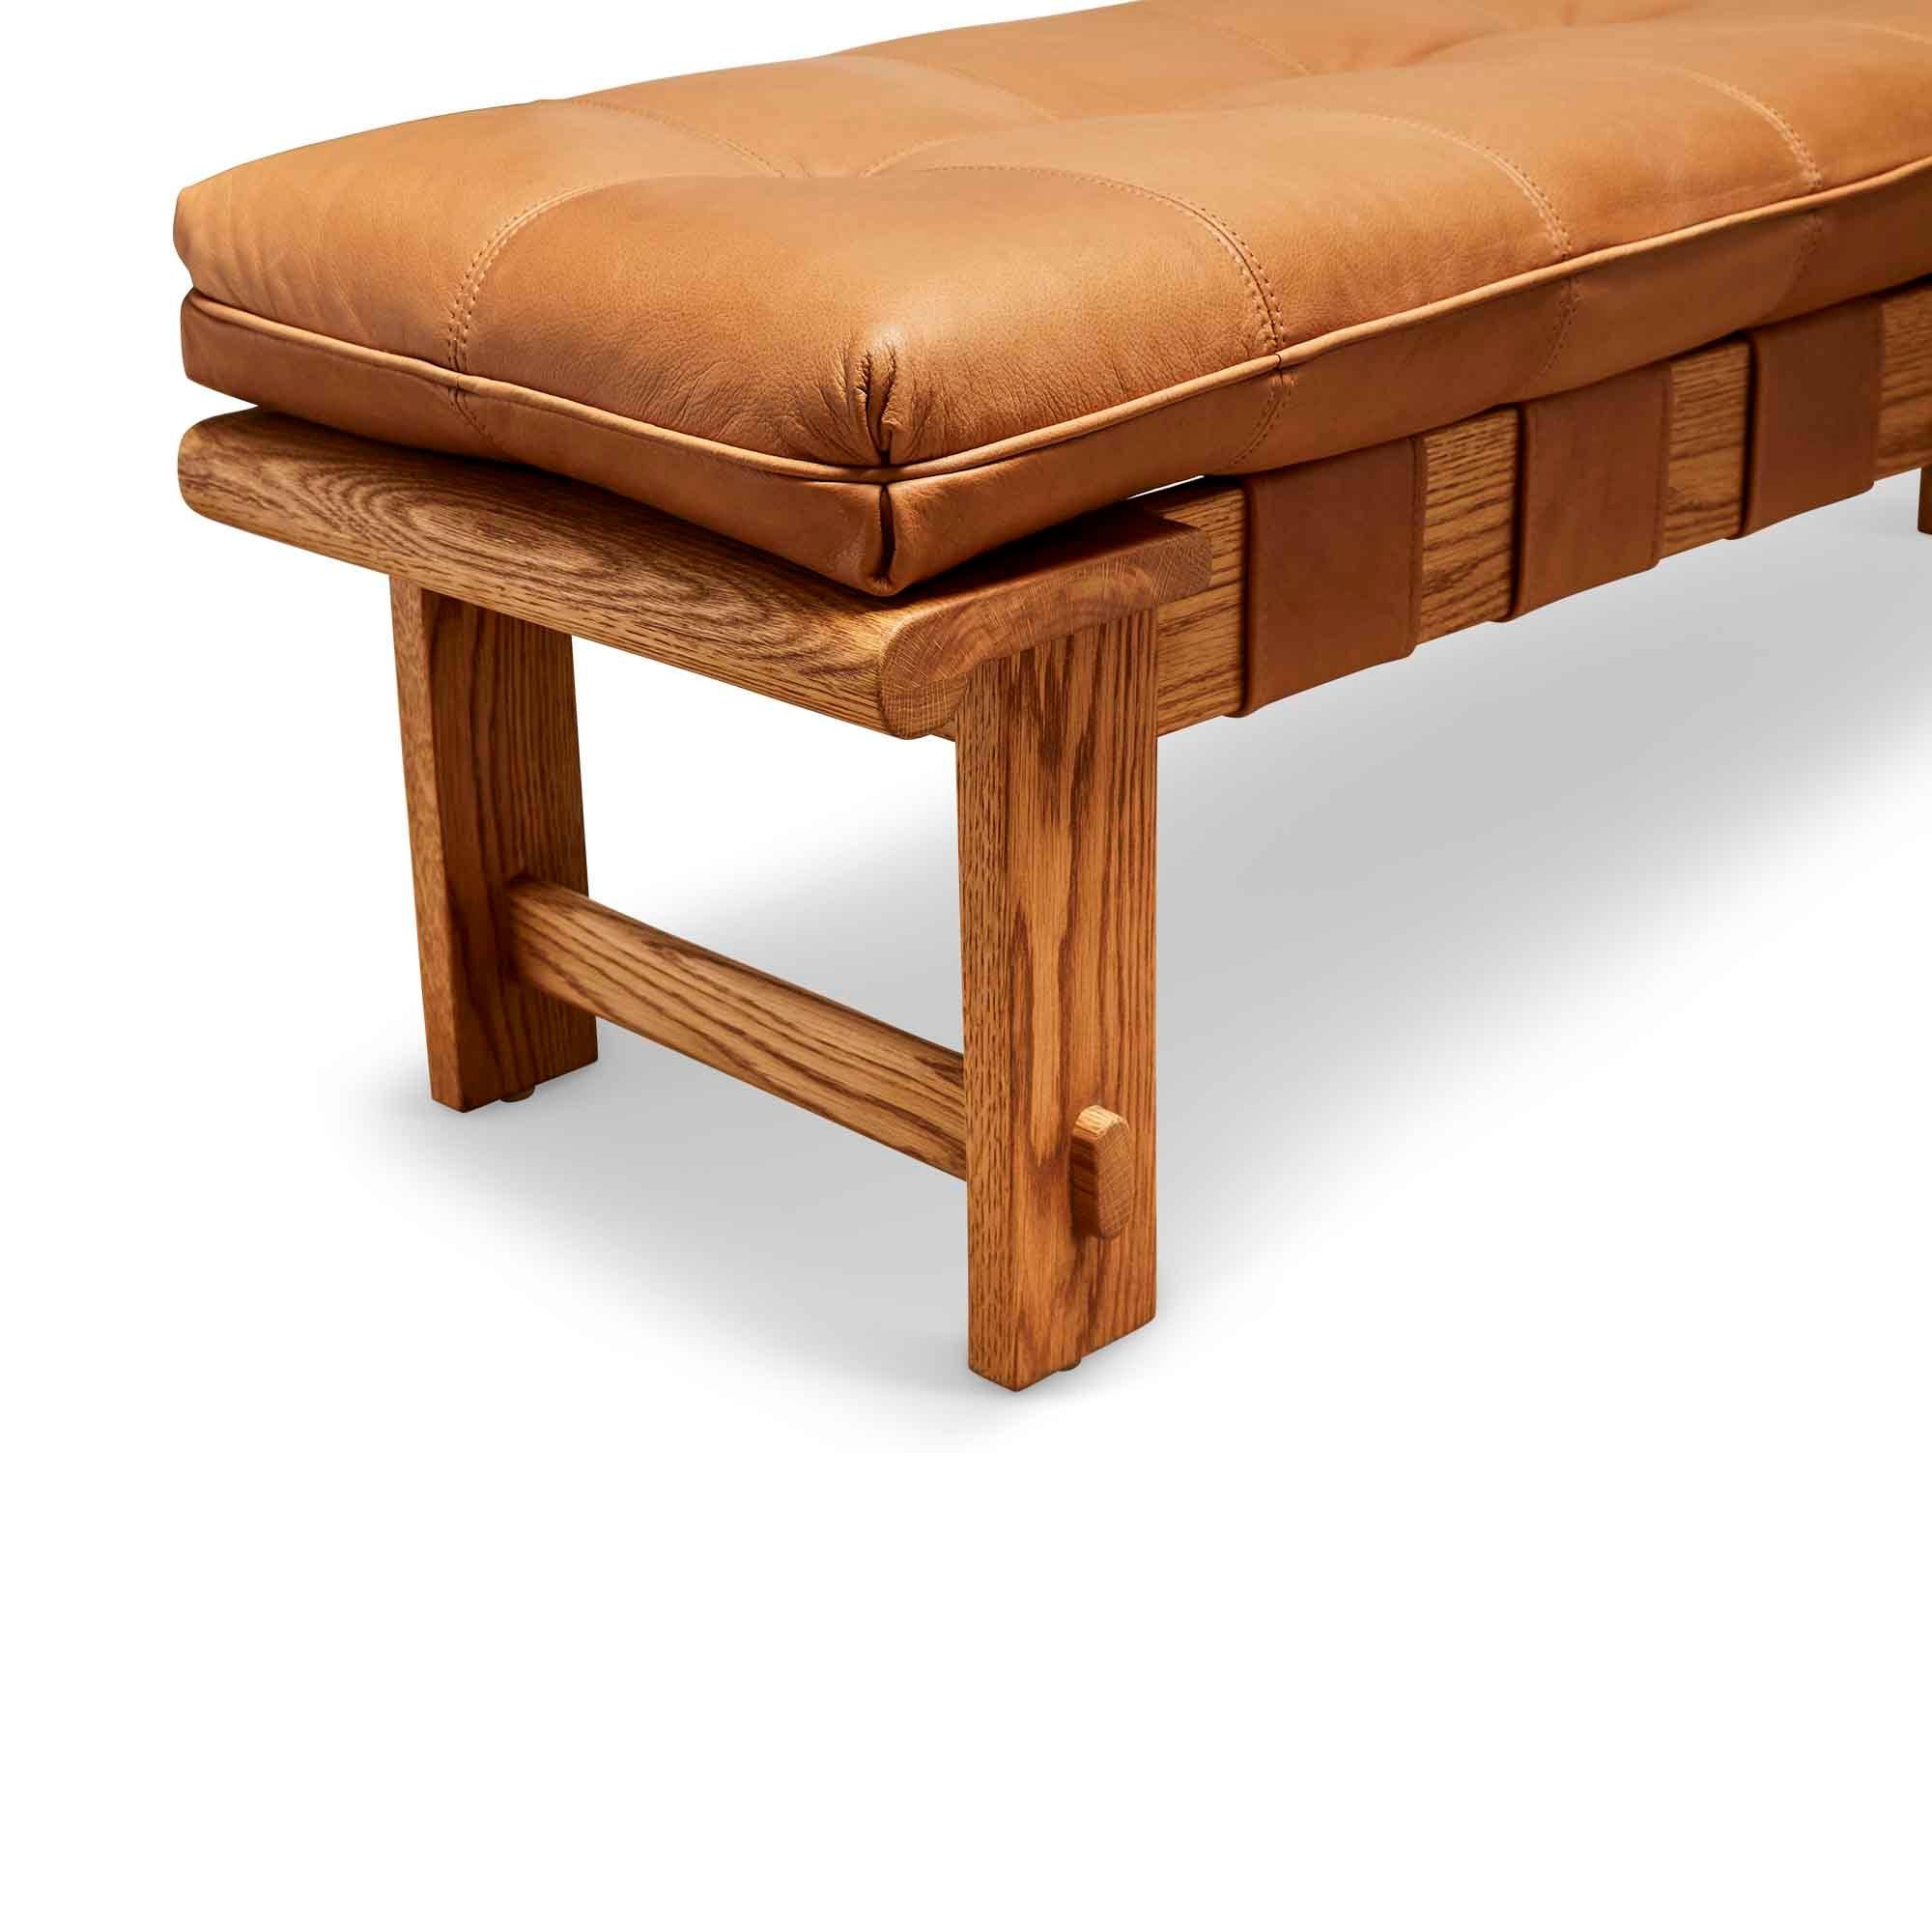 American Oak and Tan Leather Ojai Bench by Lawson-Fenning